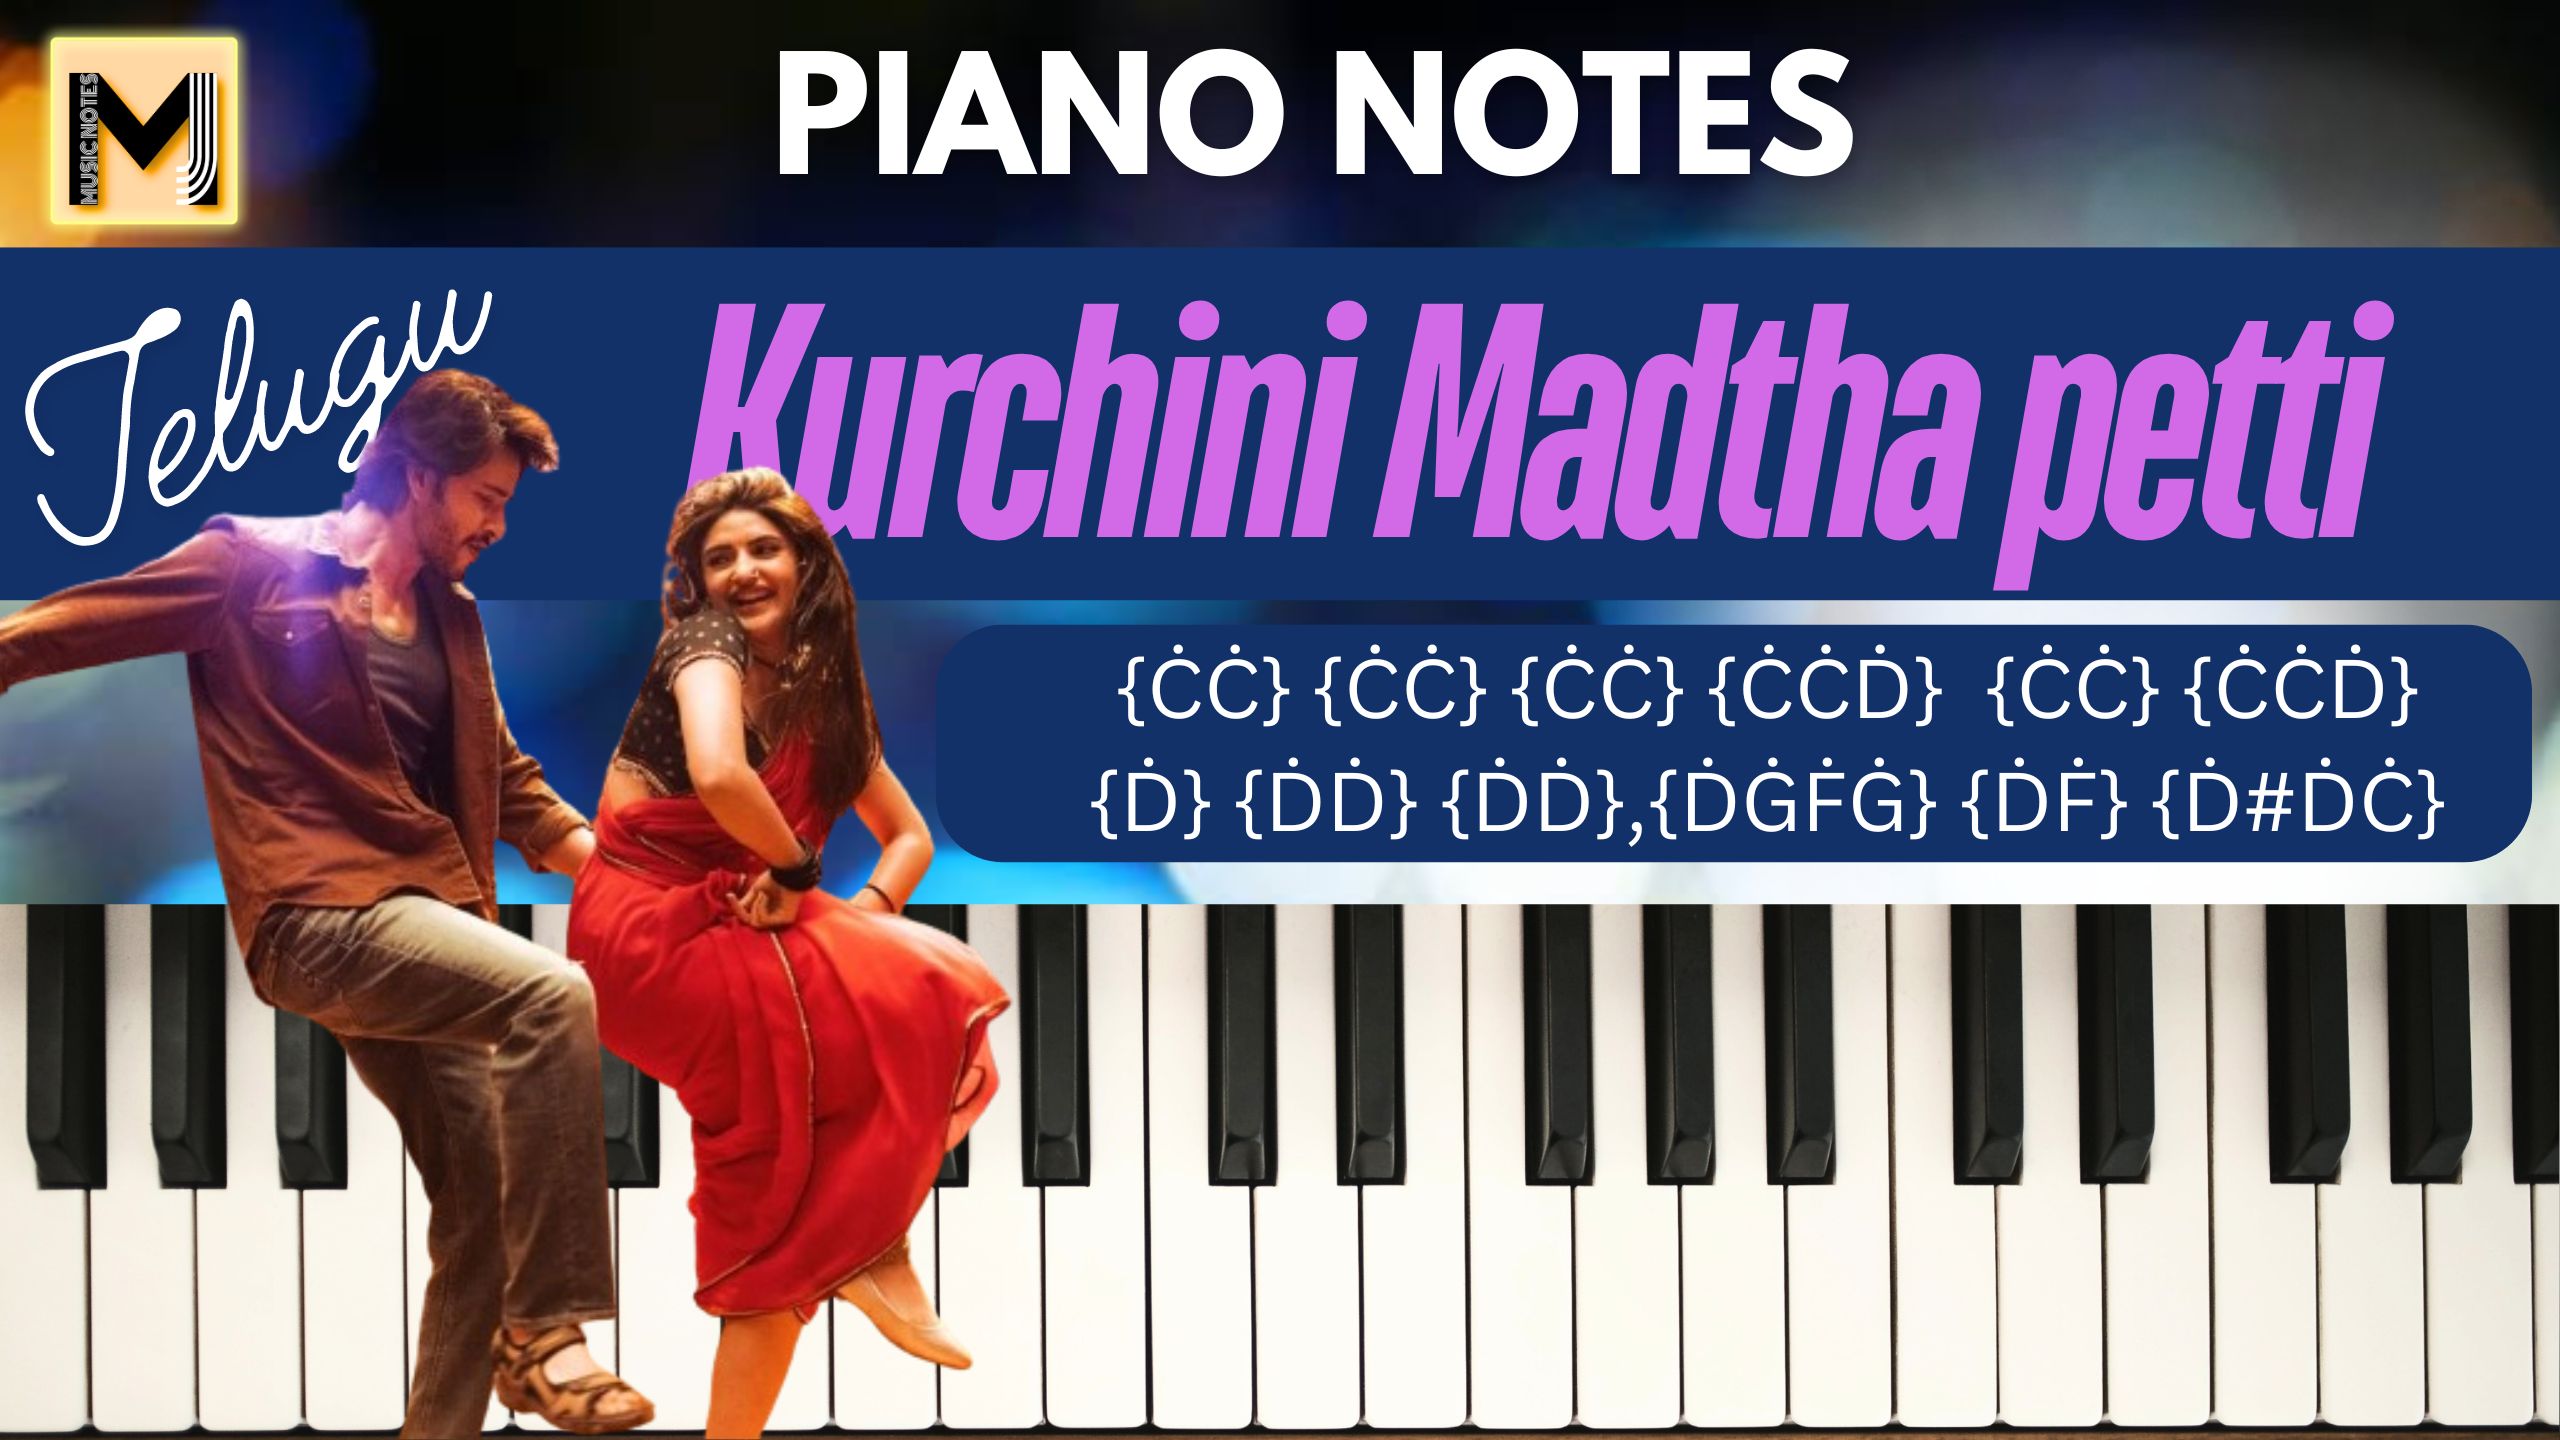 You are currently viewing Kurchi Madatha Petti Piano notes | Full Song notes | Keyboard Notes | Guntur Karam movie